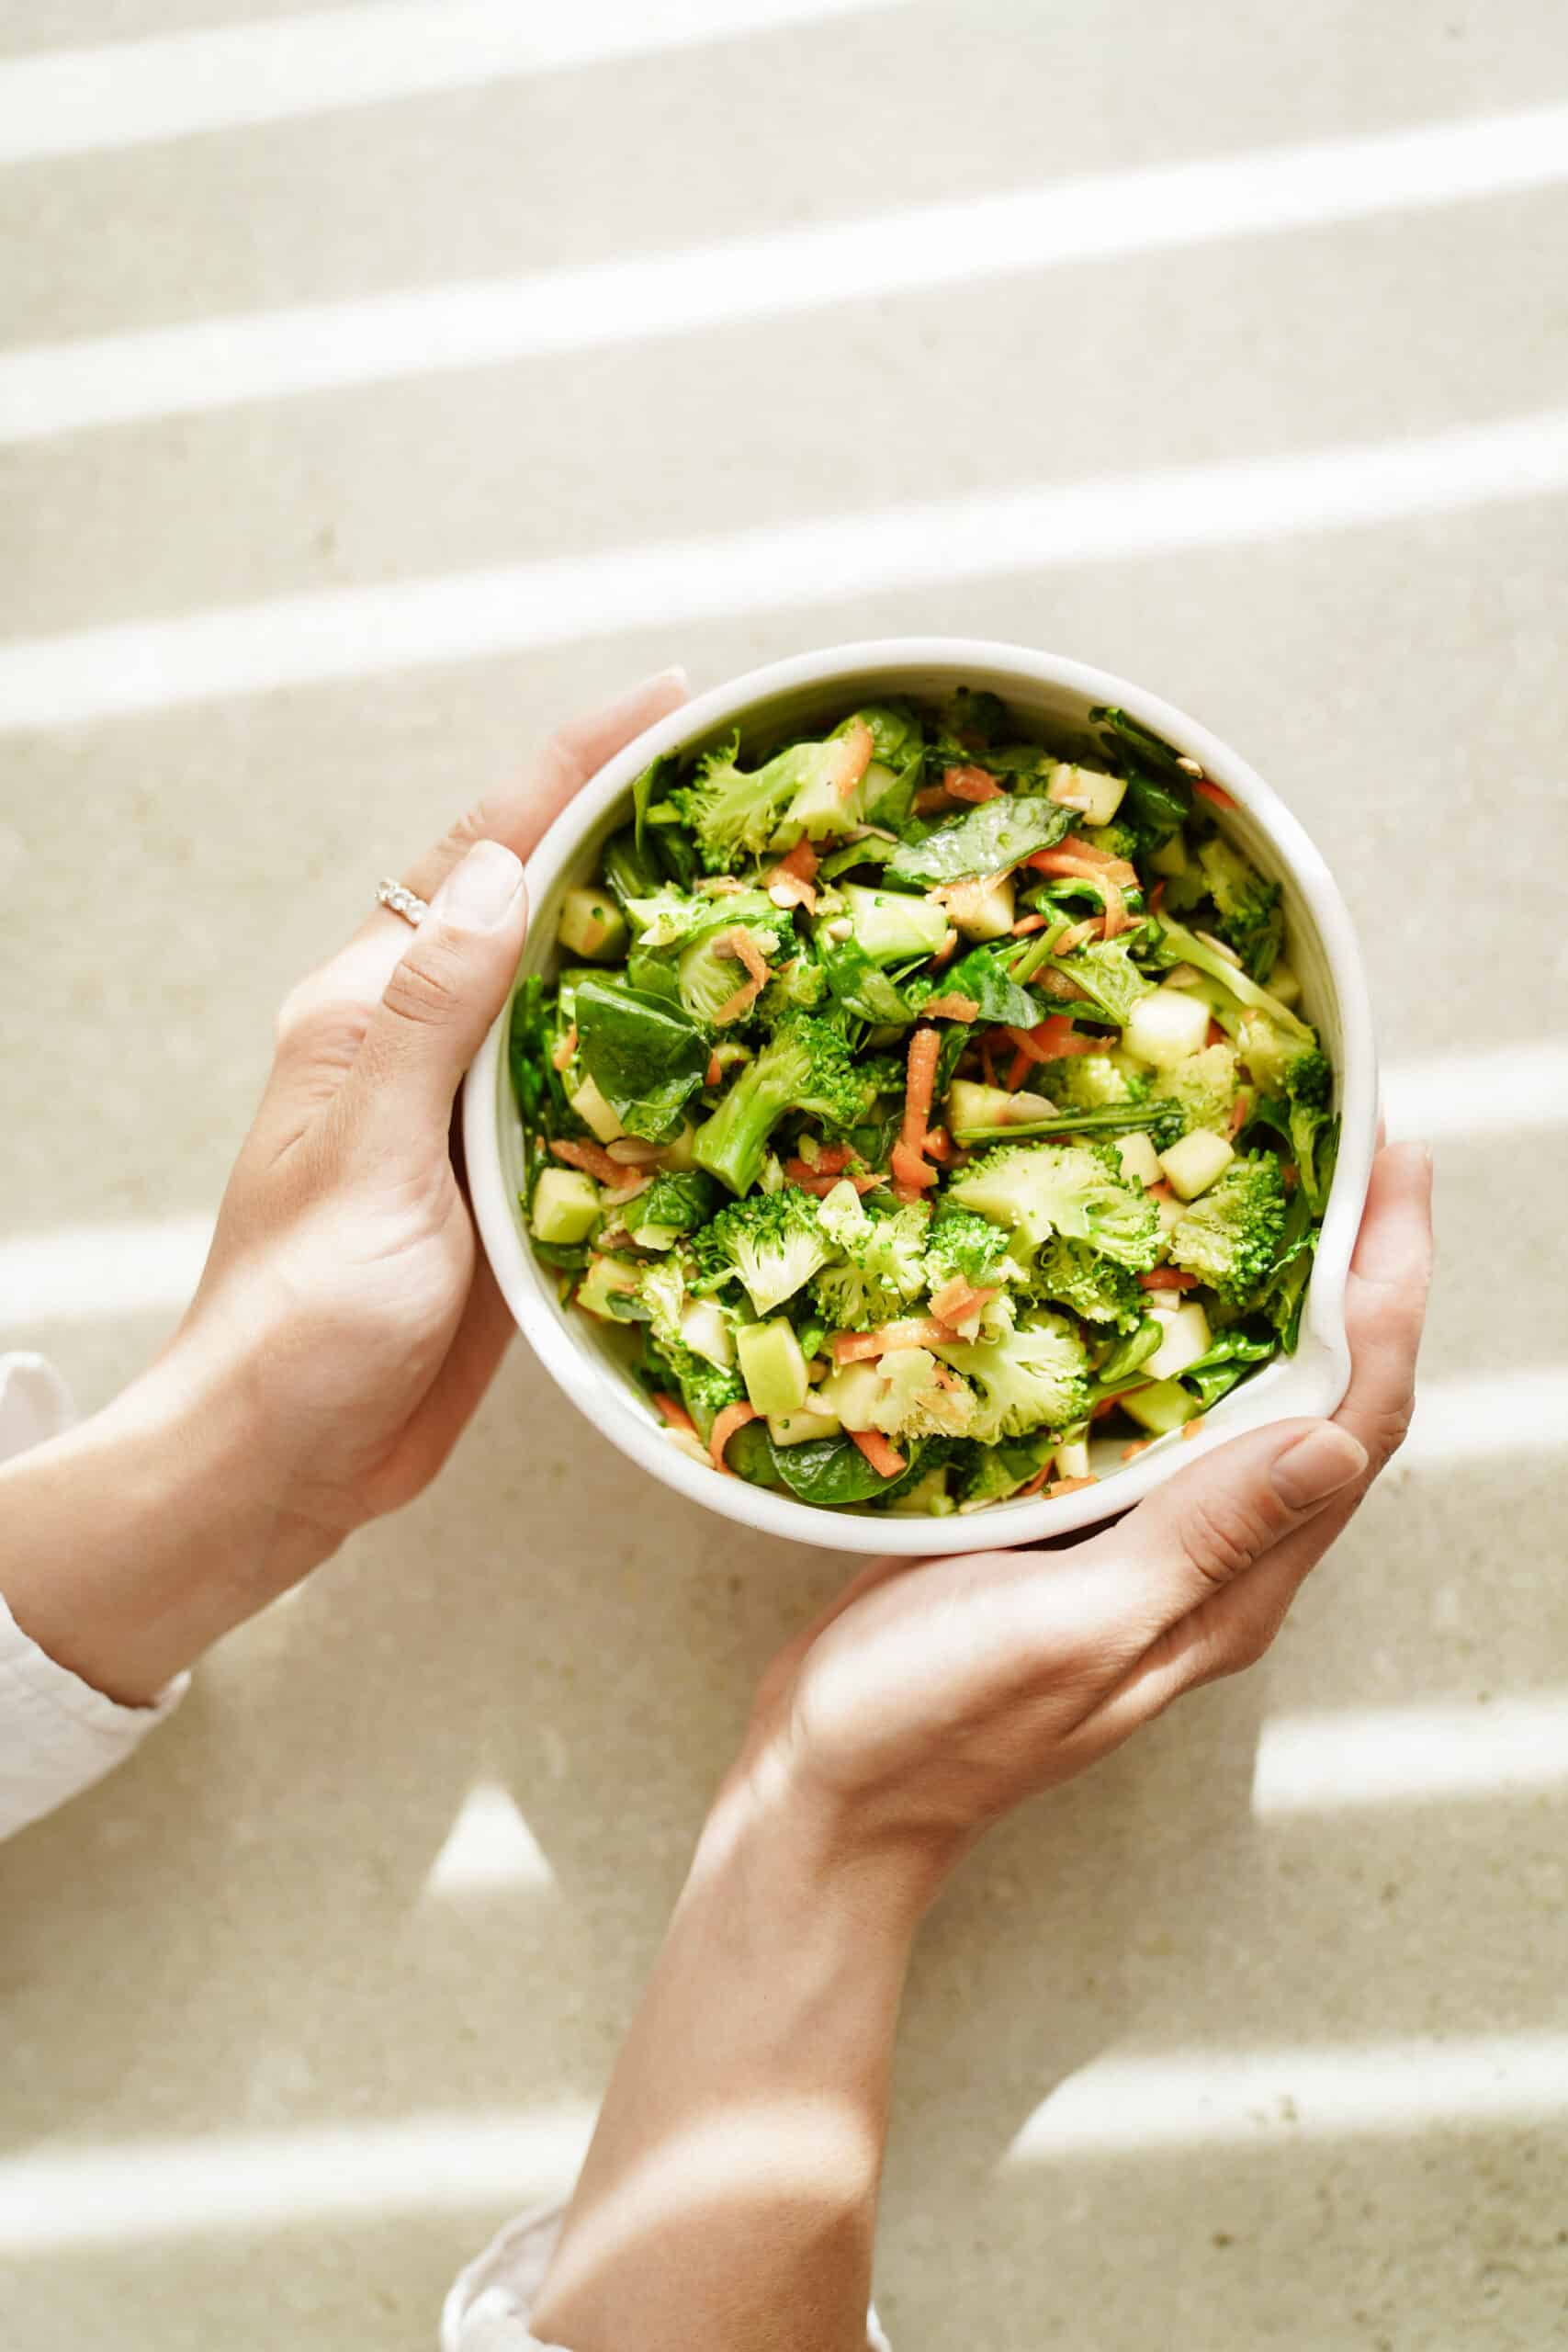 Hands holding a broccoli salad